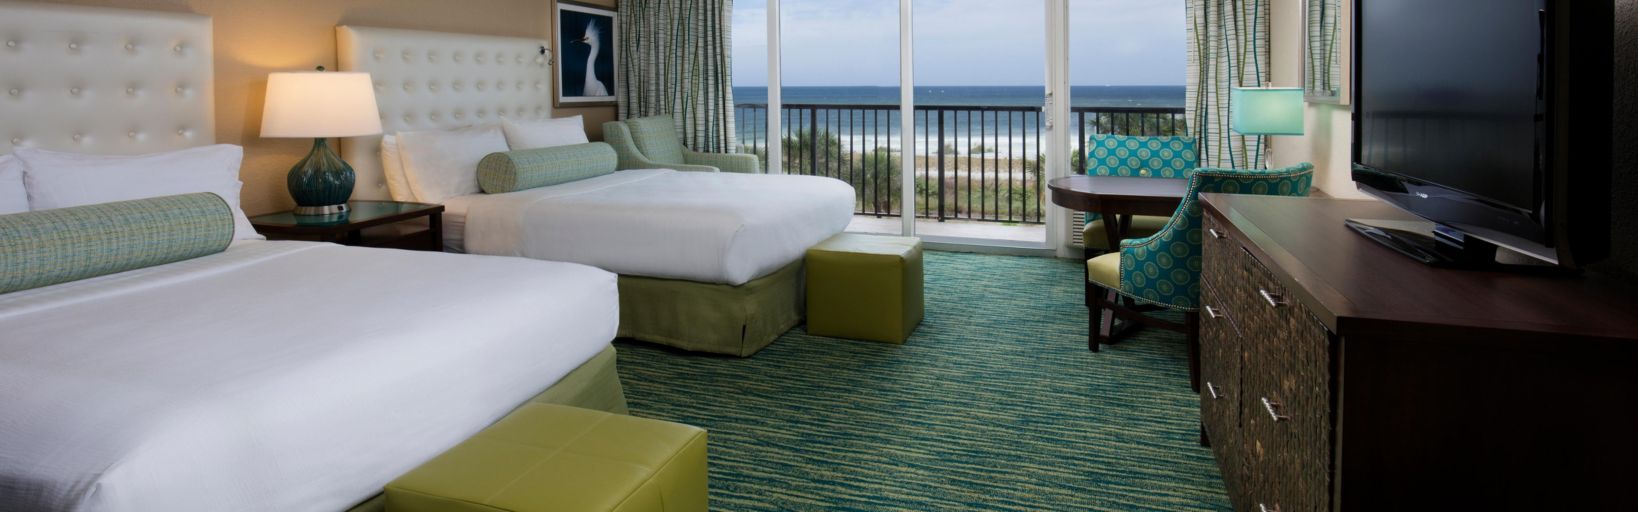 Holiday Inn Sarasota Hotels Holiday Inn Sarasota Lido Beach The